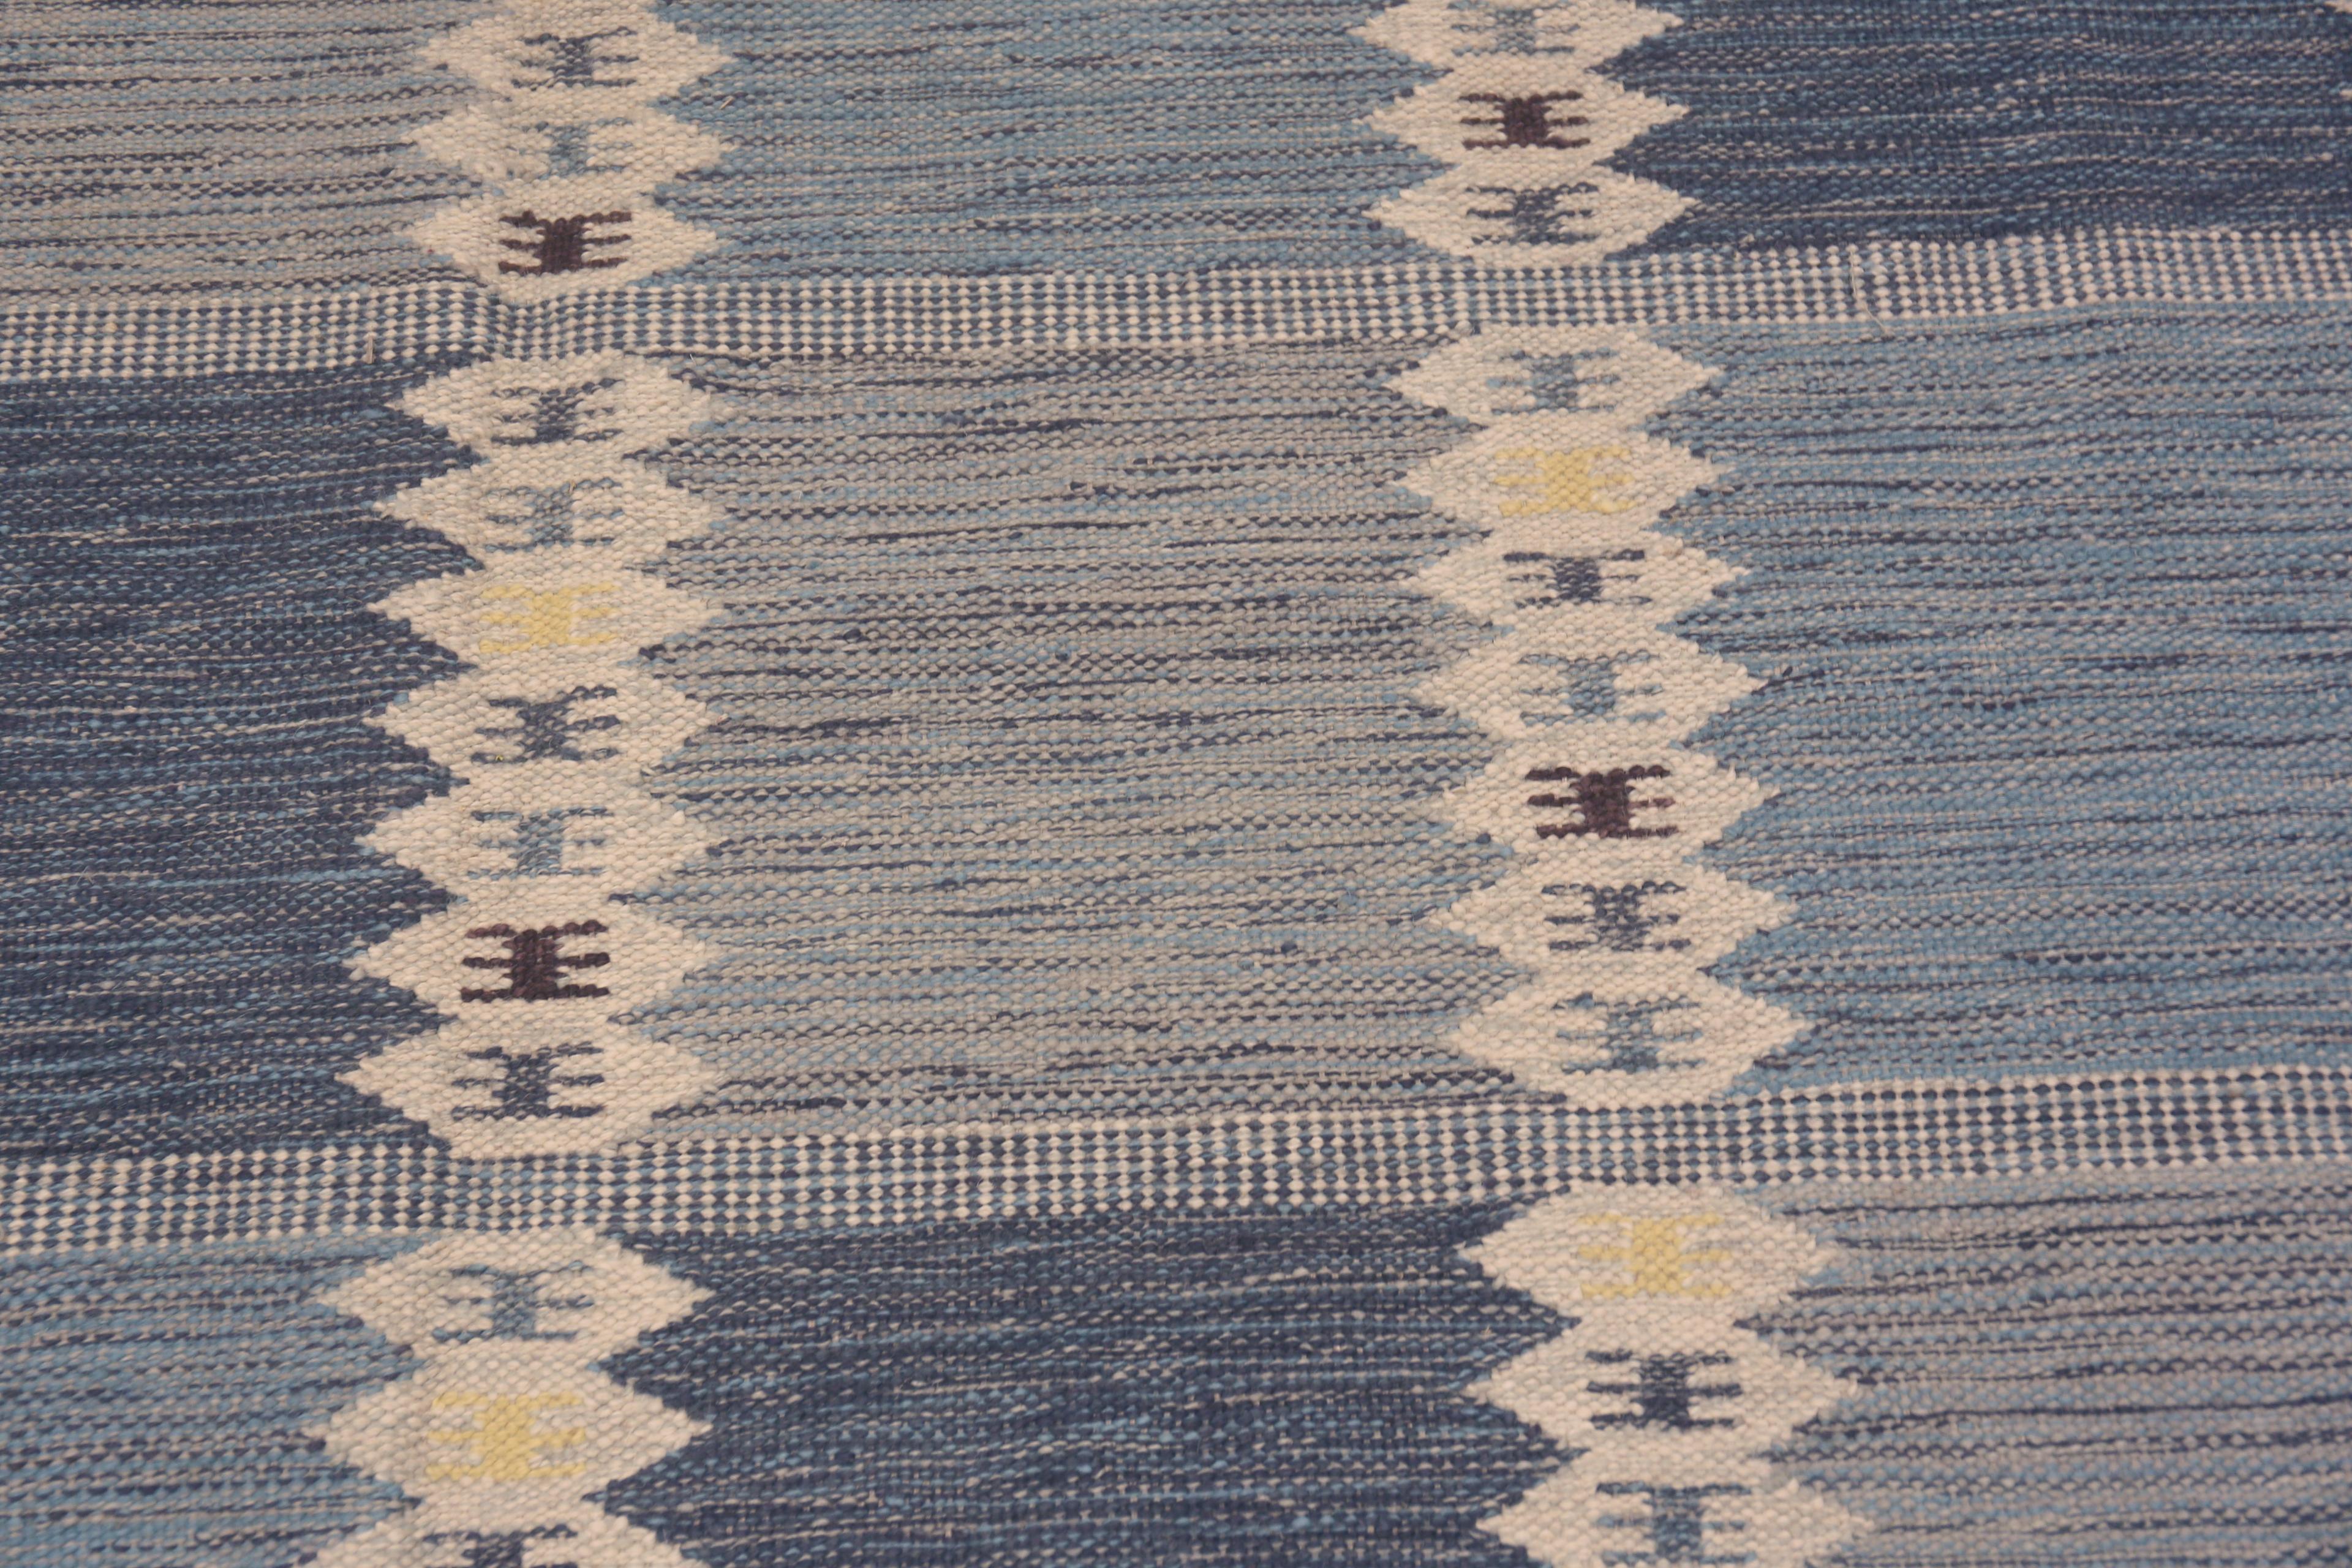 Laine Collection Nazmiyal suédoise mi-siècle moderne Taille du tapis Kilim 9' x 12'10